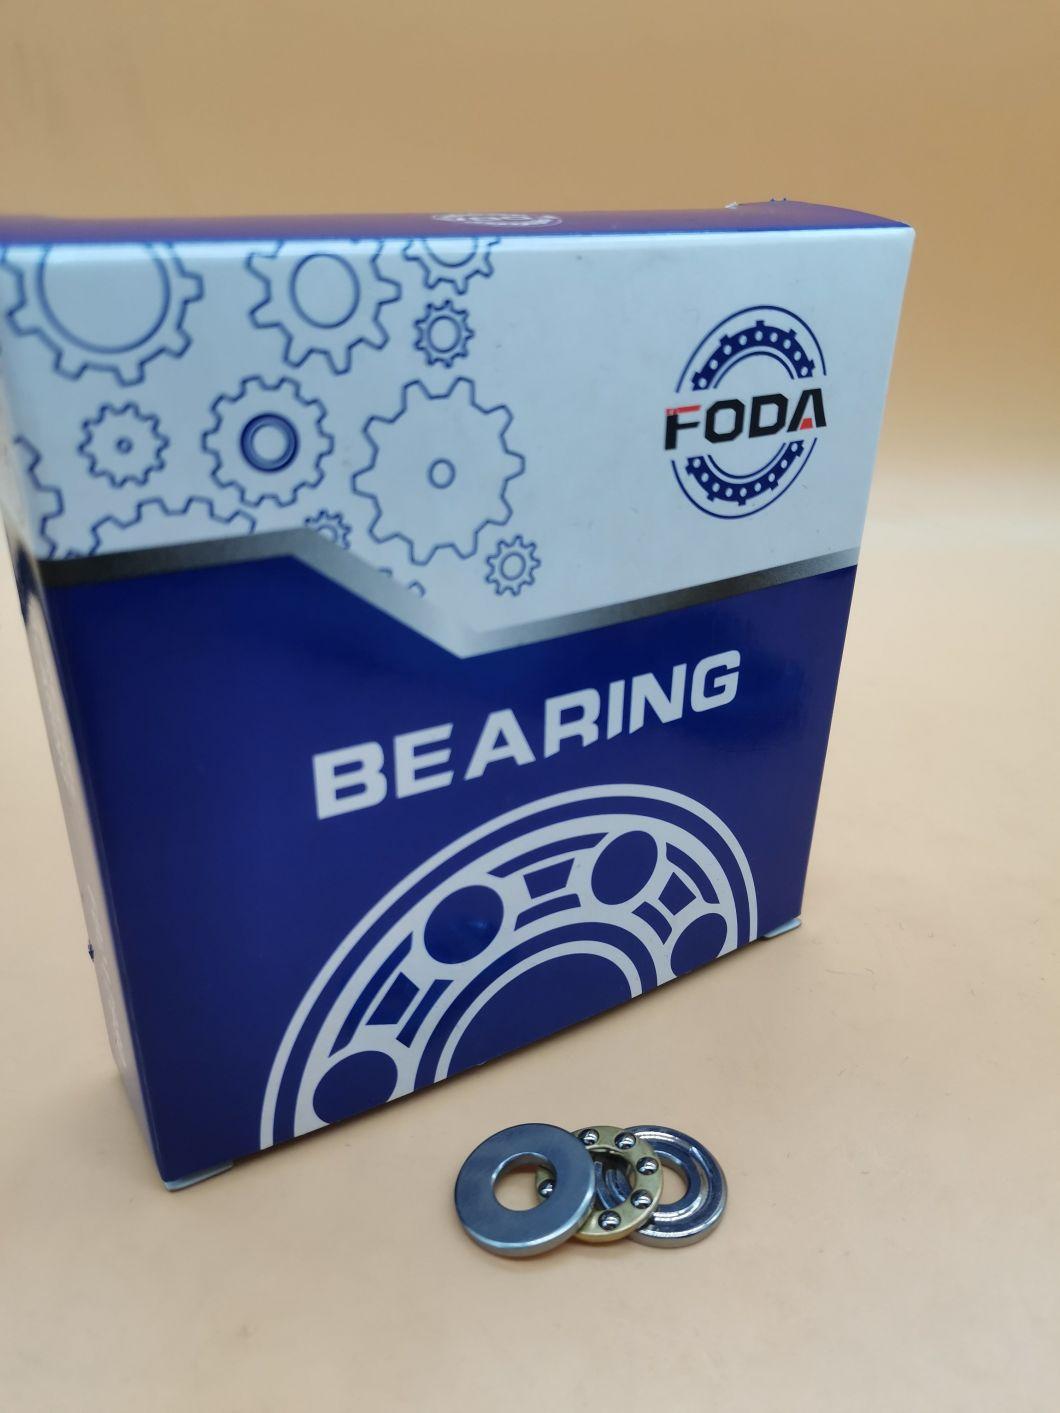 Foda Factory Supplies Big Thrust Ball Bearings/Low Speed Reducer/Foda High Quality Bearings Instead of Bearings/Thrust Ball Bearings of 51332m